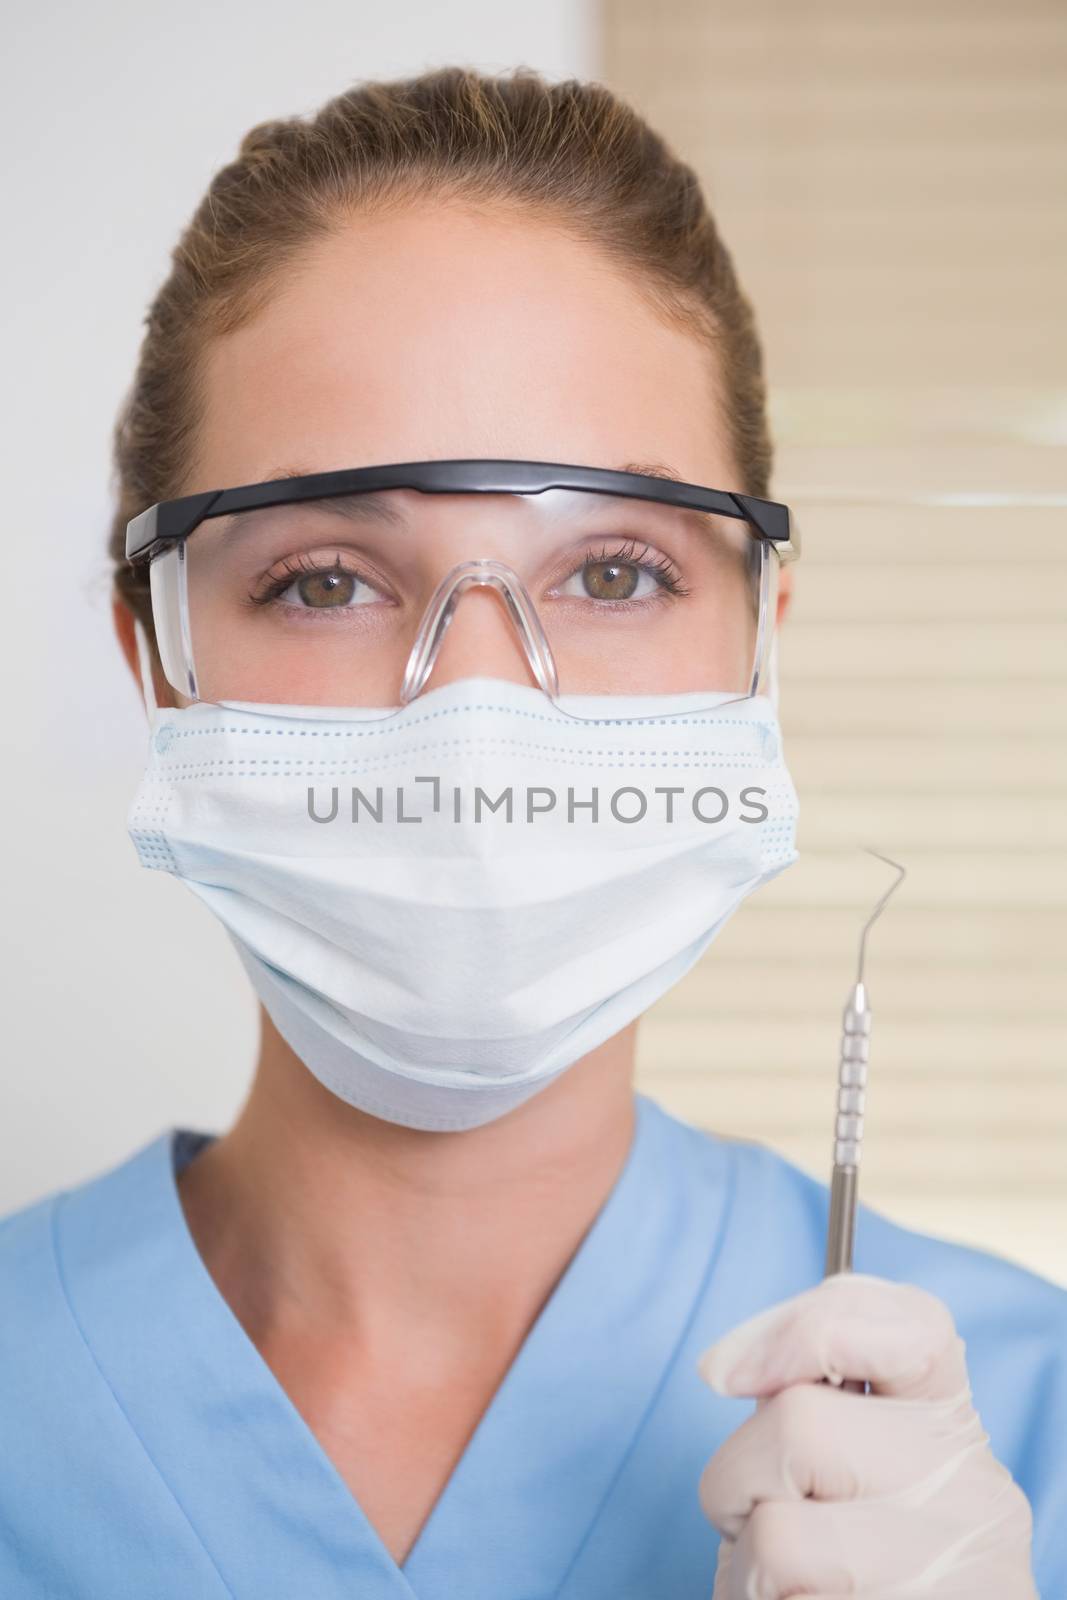 Dentist in surgical mask holding dental explorer by Wavebreakmedia